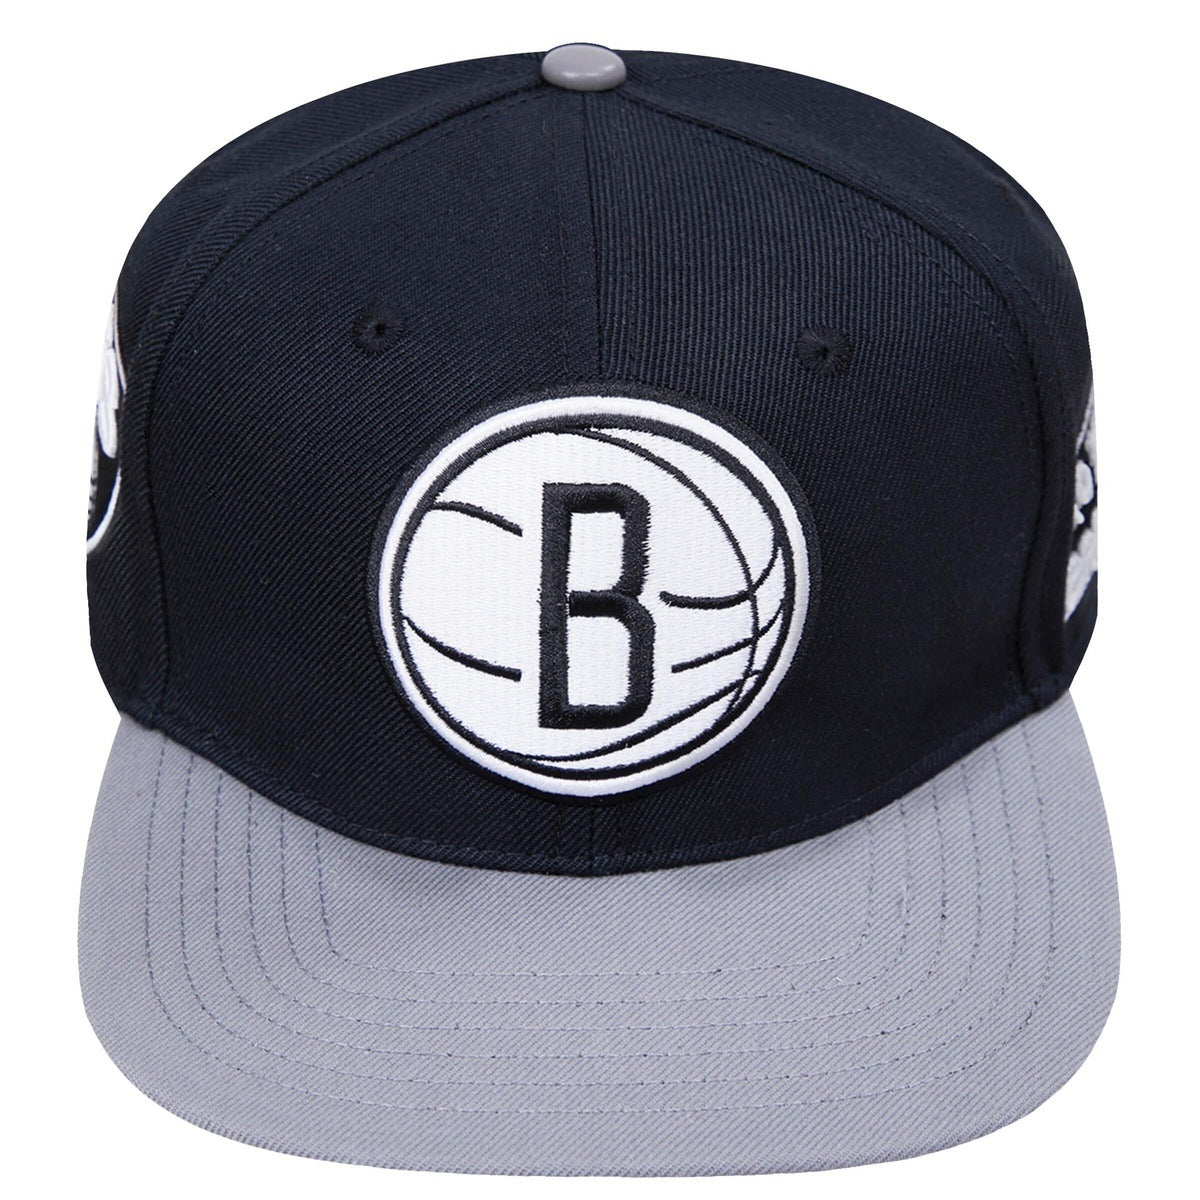 NBA BROOKLYN NETS RETRO CLASSIC UNISEX PRIMARY LOGO WOOL SNAPBACK HAT (BLACK/GREY)